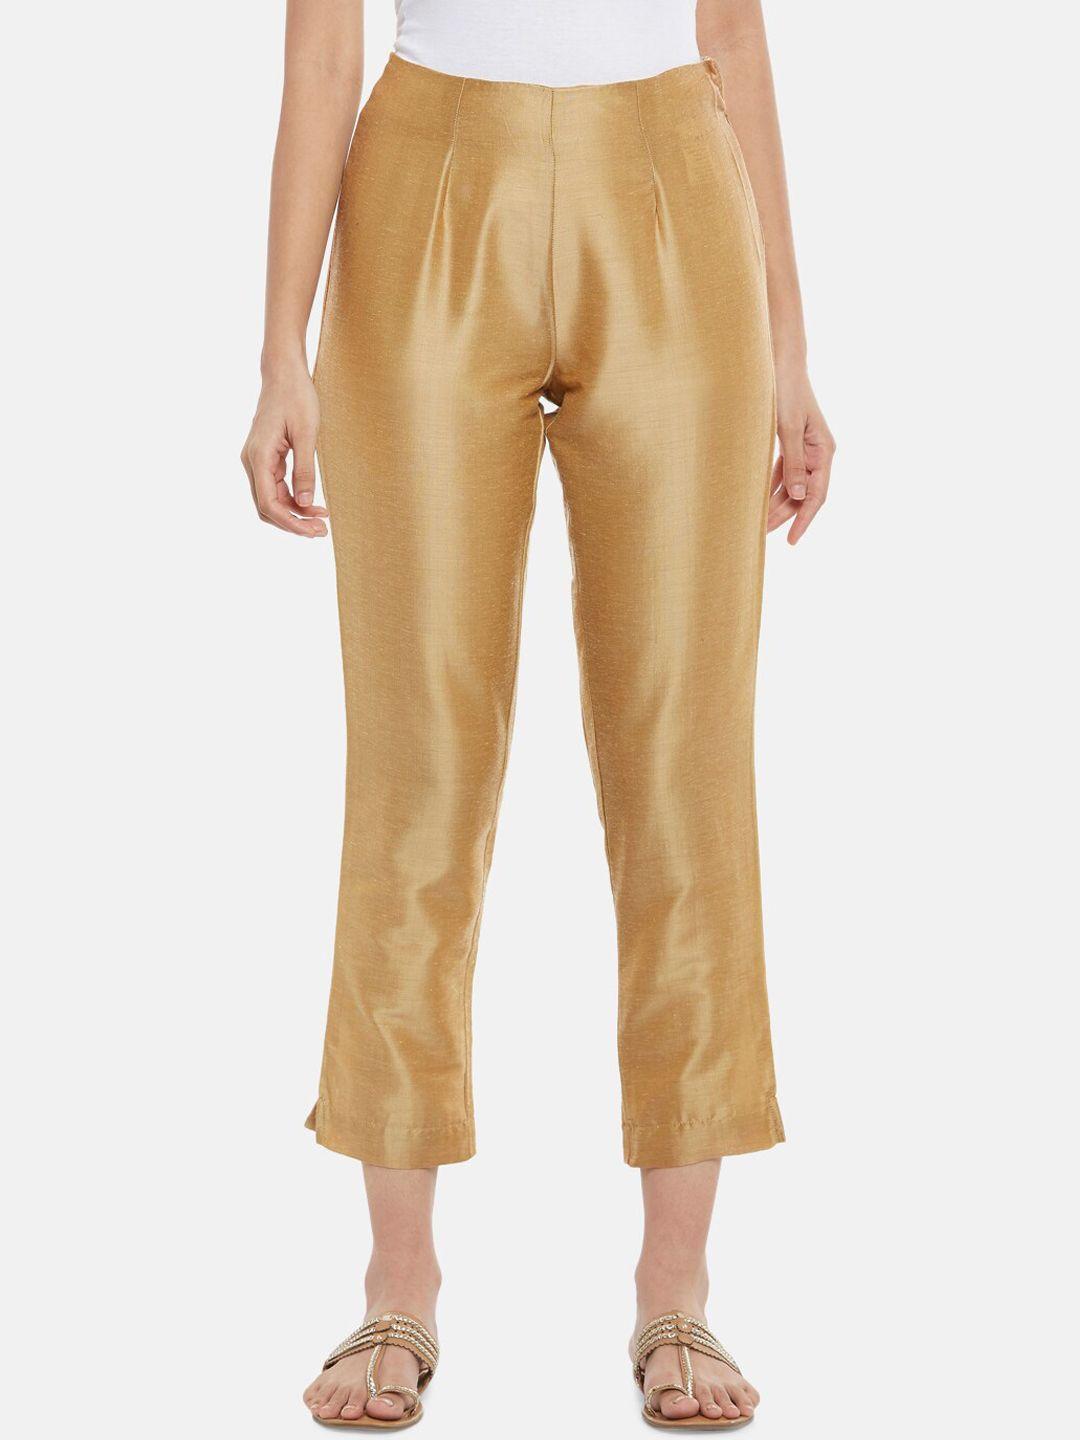 rangmanch by pantaloons women gold-toned trousers